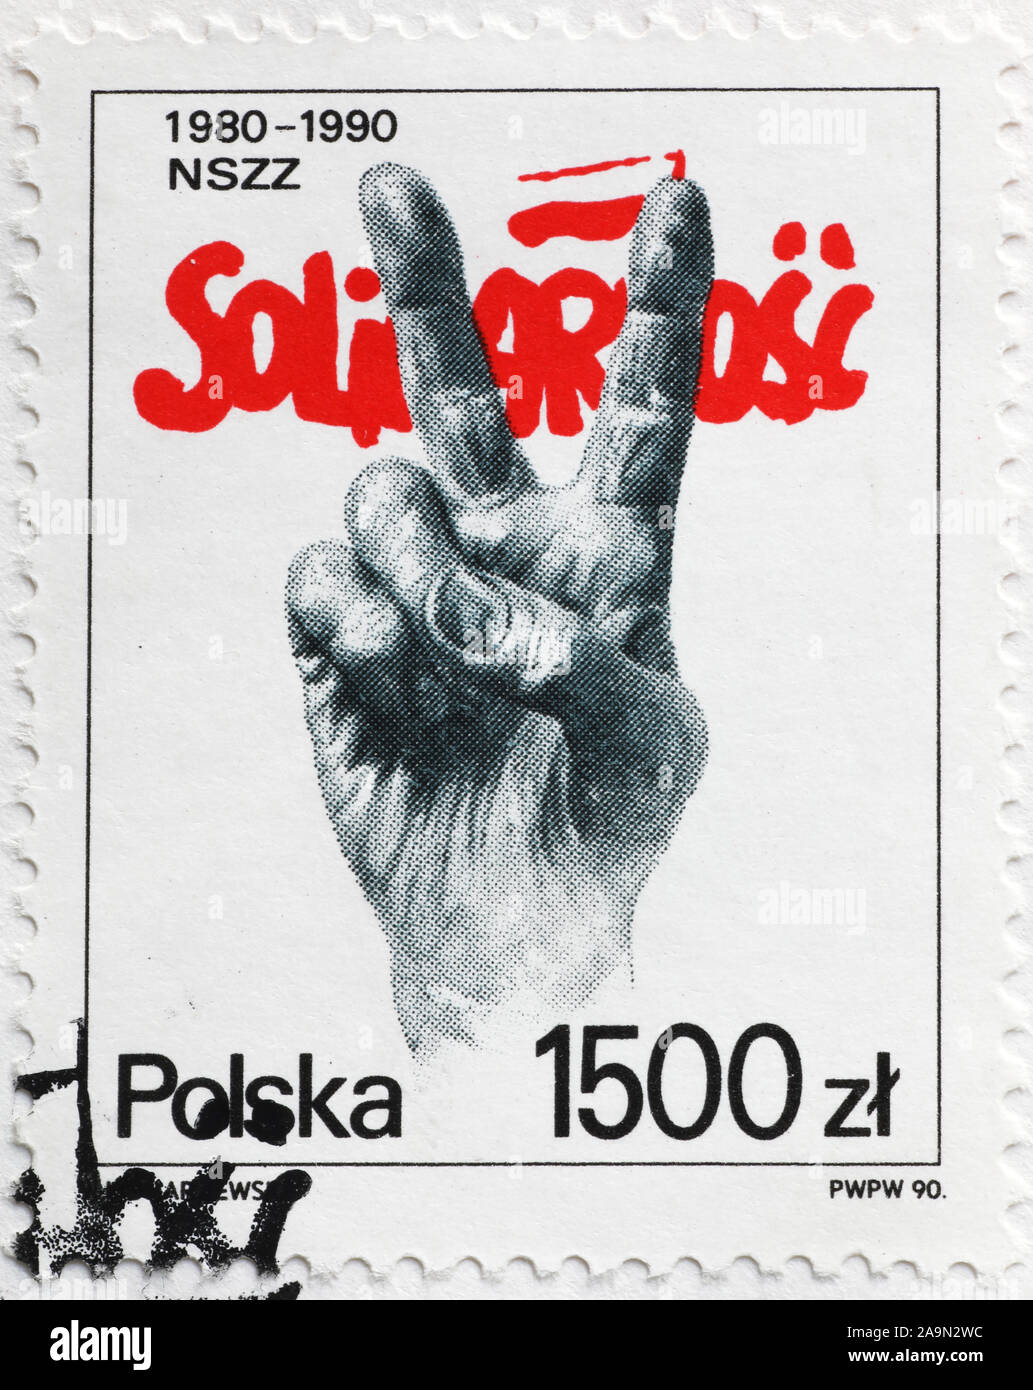 Celebration of trade union Solidarnosc on polish stamp Stock Photo